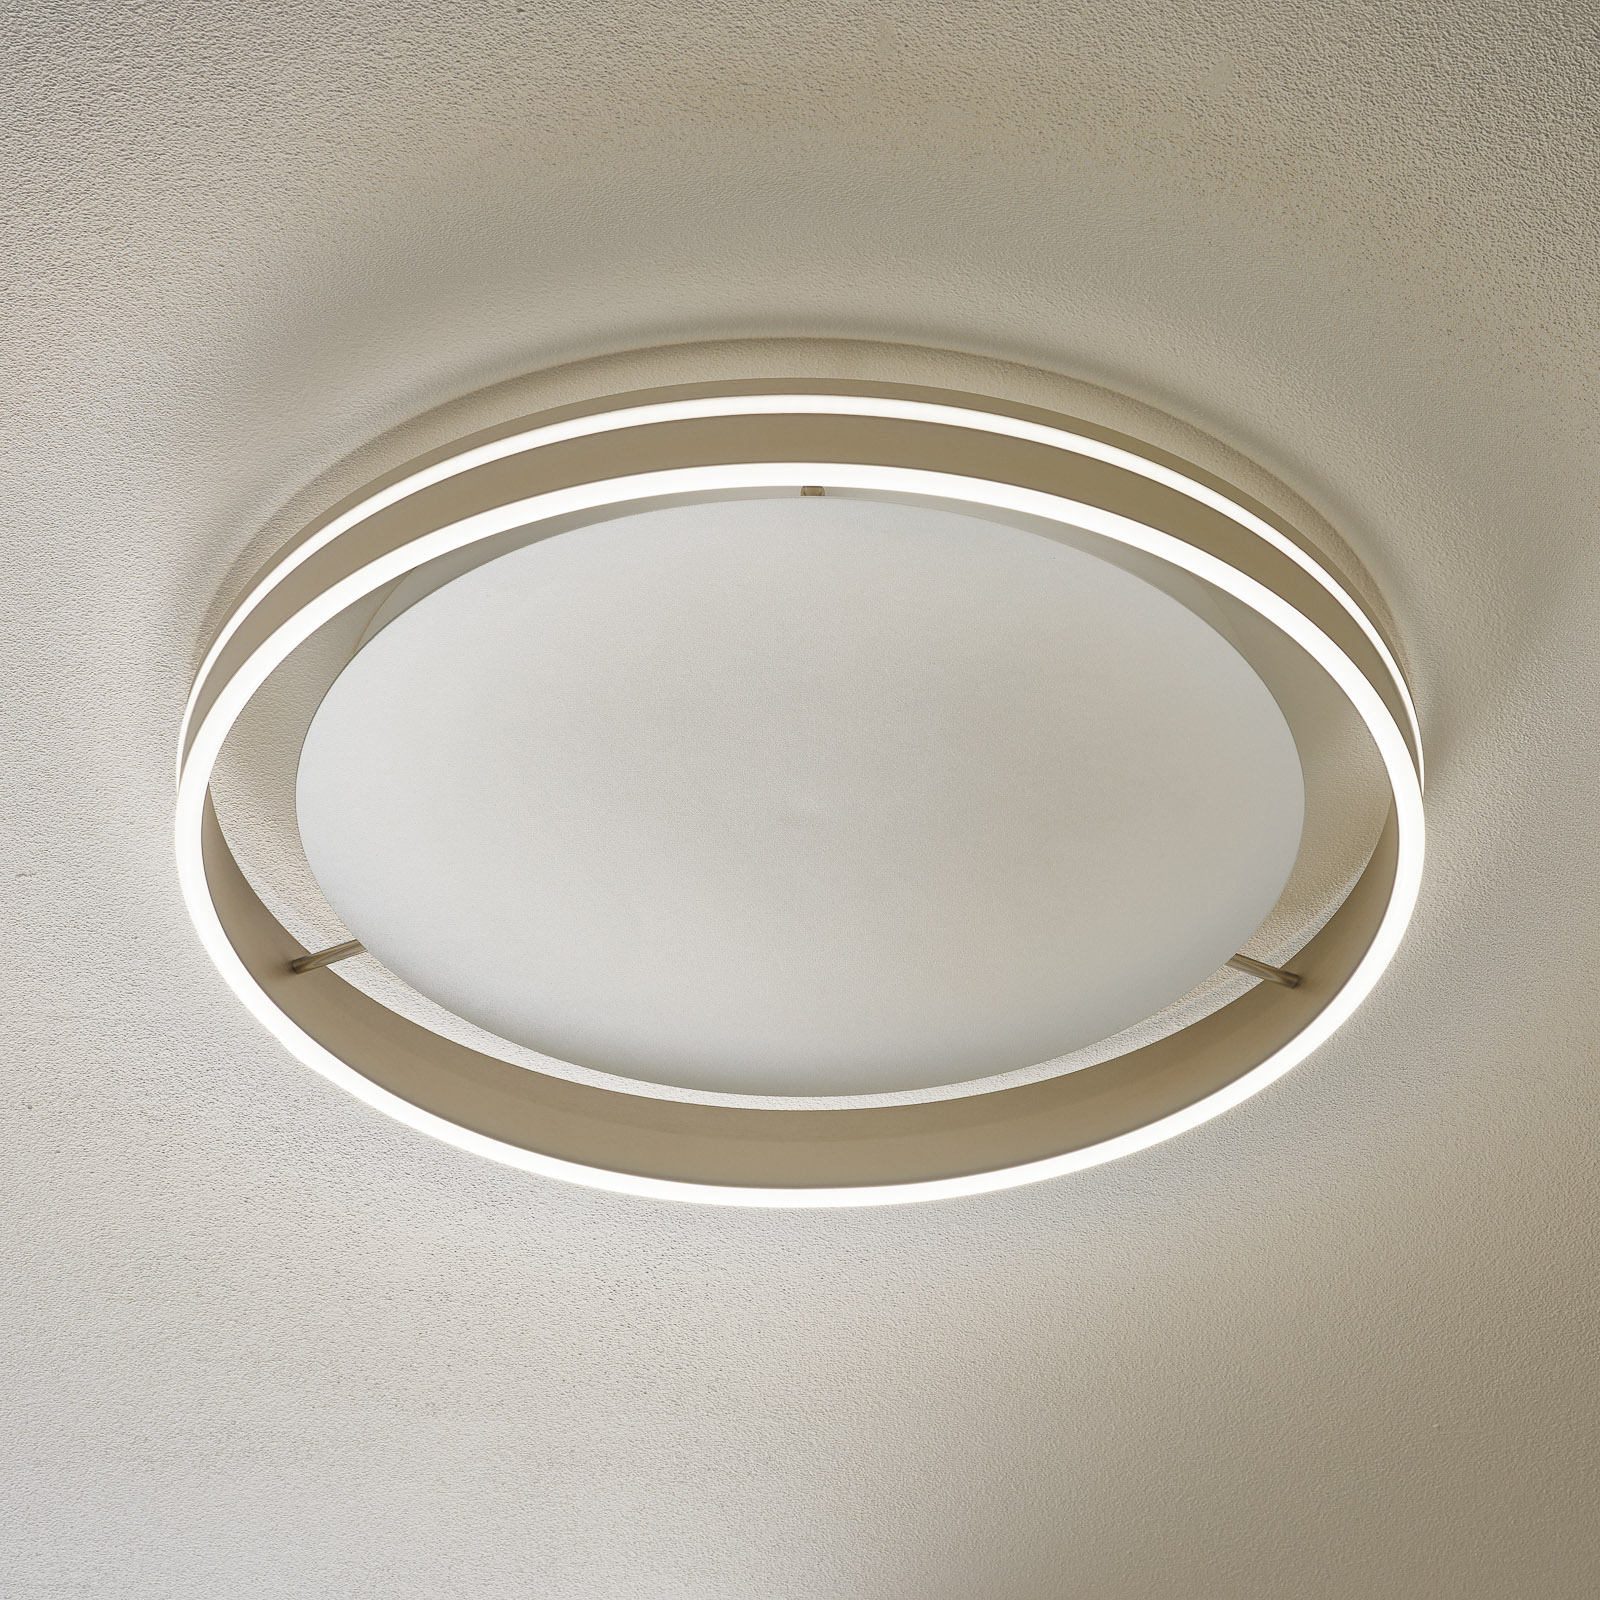 Paul Neuhaus Q-VITO LED-kattovalaisin 59 cm teräs